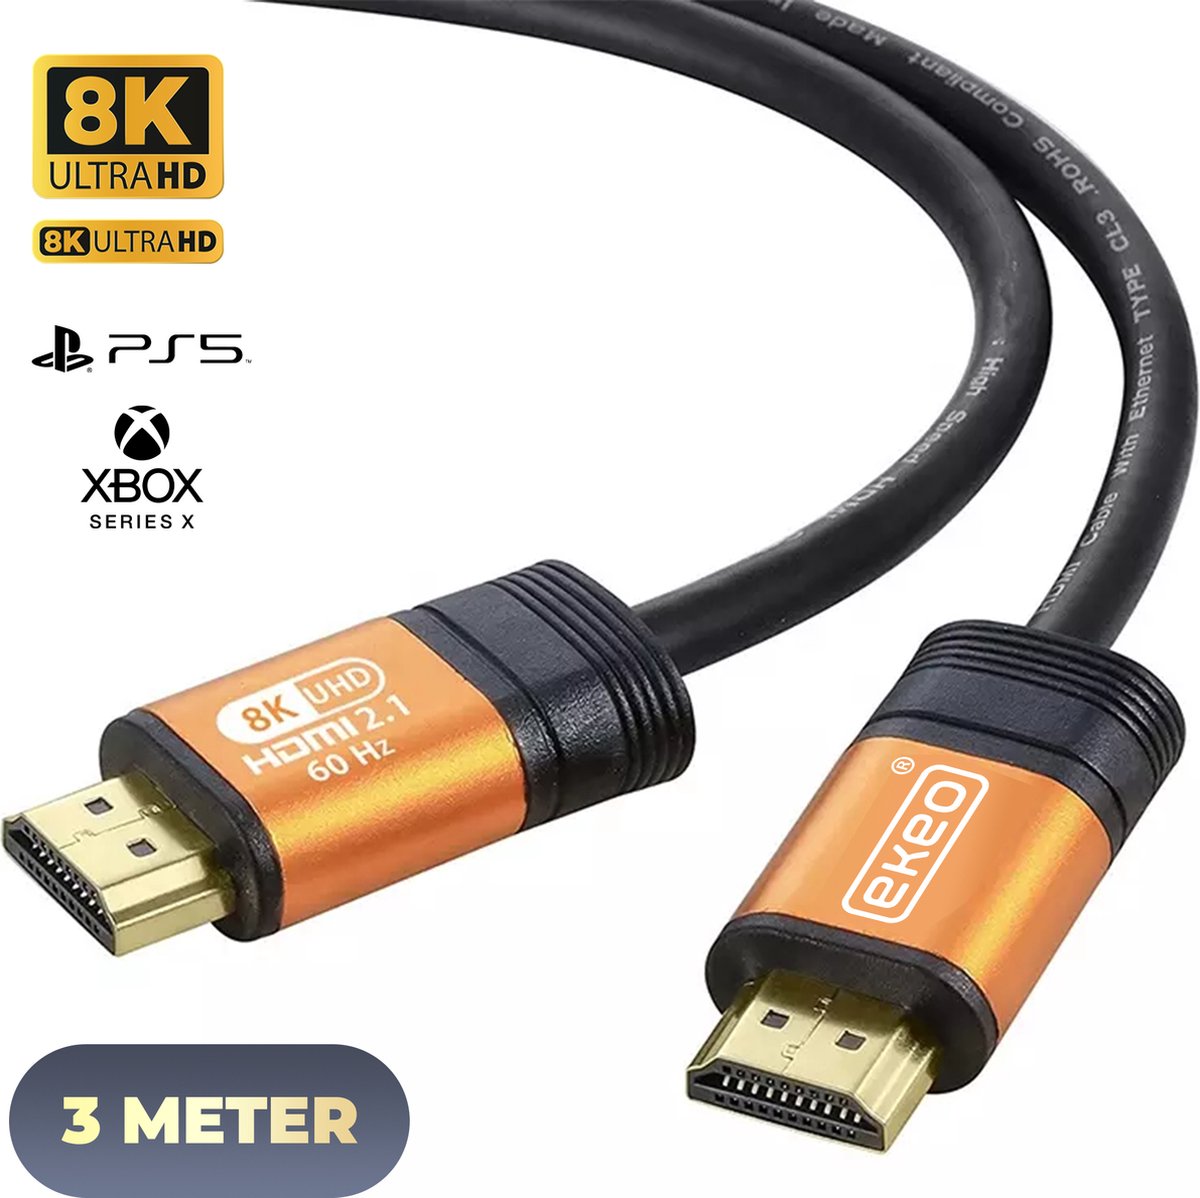 PRO HDMI Kabel 2.1 - Ultra HD High Speed 8K - HDMI naar HDMI - Xbox Series X & PS5 - 3 meter